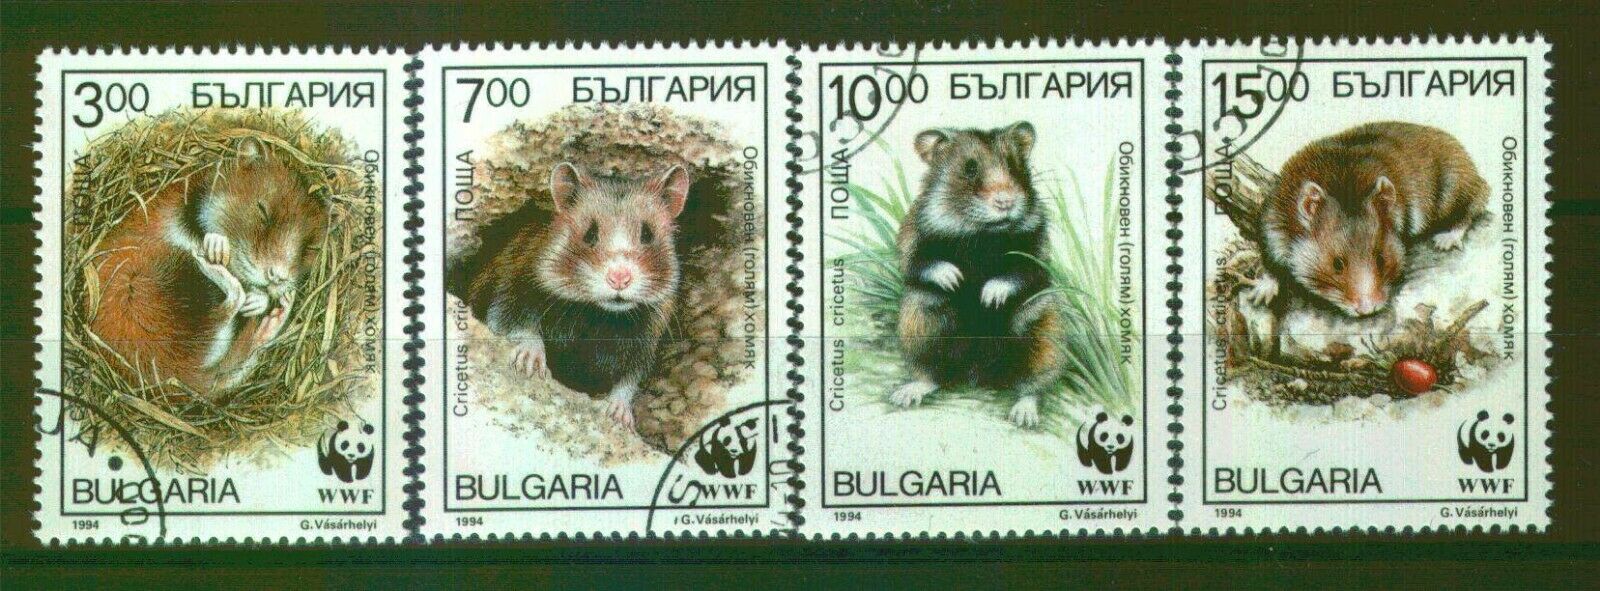 211 - Bulgaria 1994 - Wwf -  European Hamster - Used Set